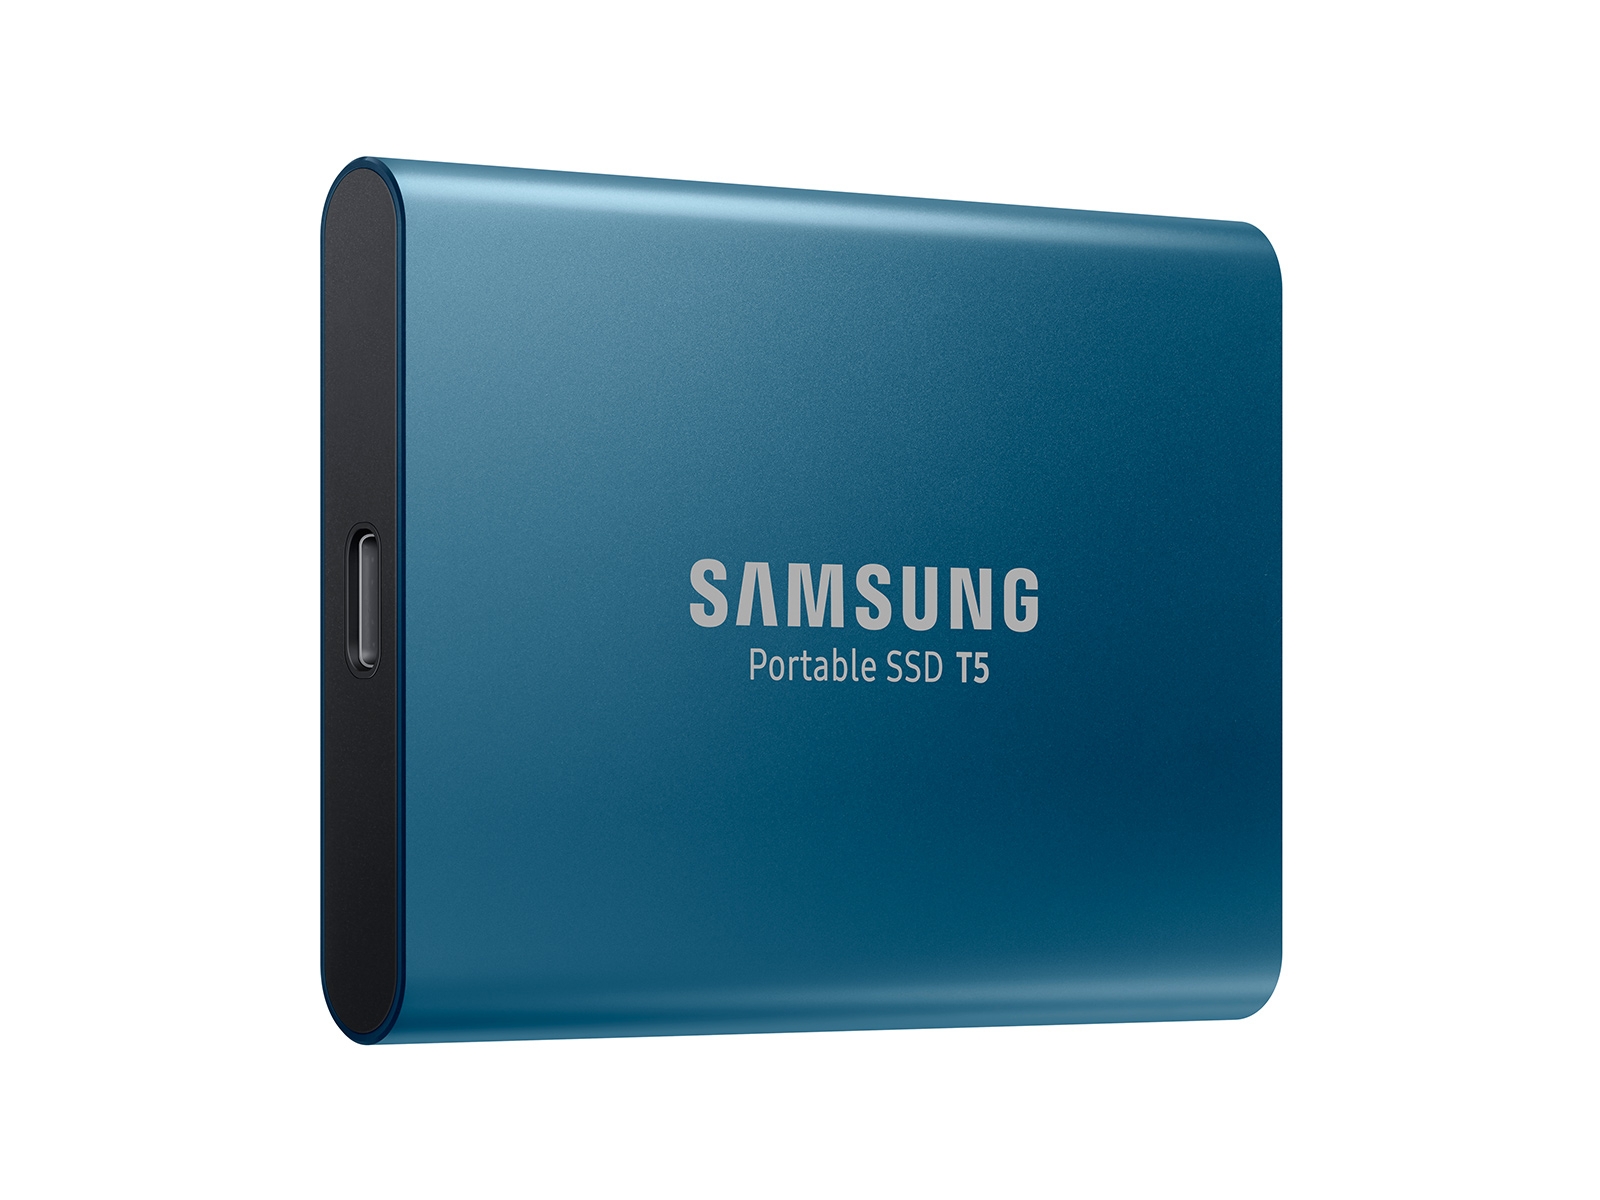 Portable SSD T5 250GB Memory & Storage - MU-PA250B/AM Samsung